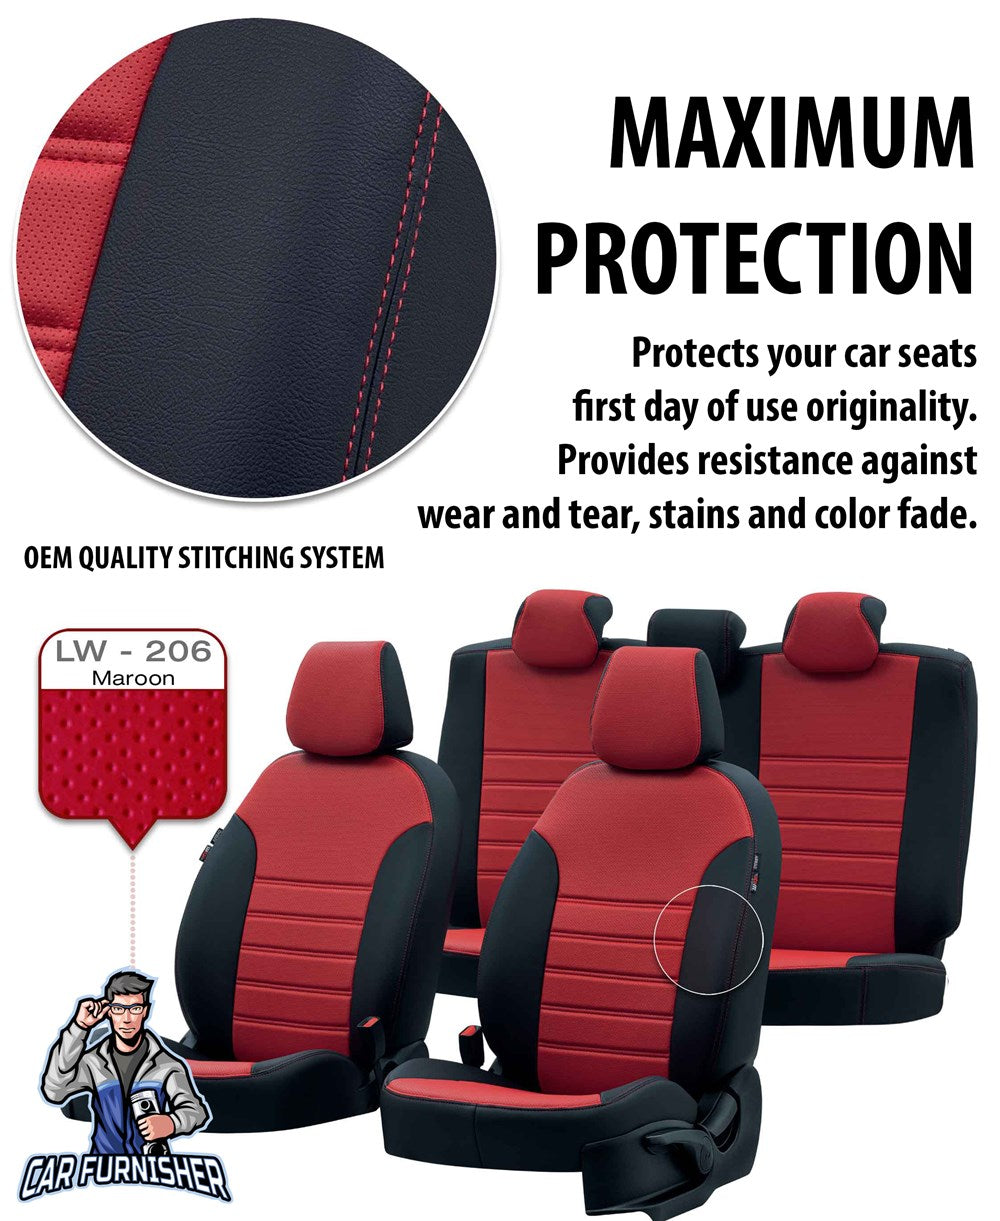 Daihatsu Terios Seat Covers Istanbul Leather Design Black Leather